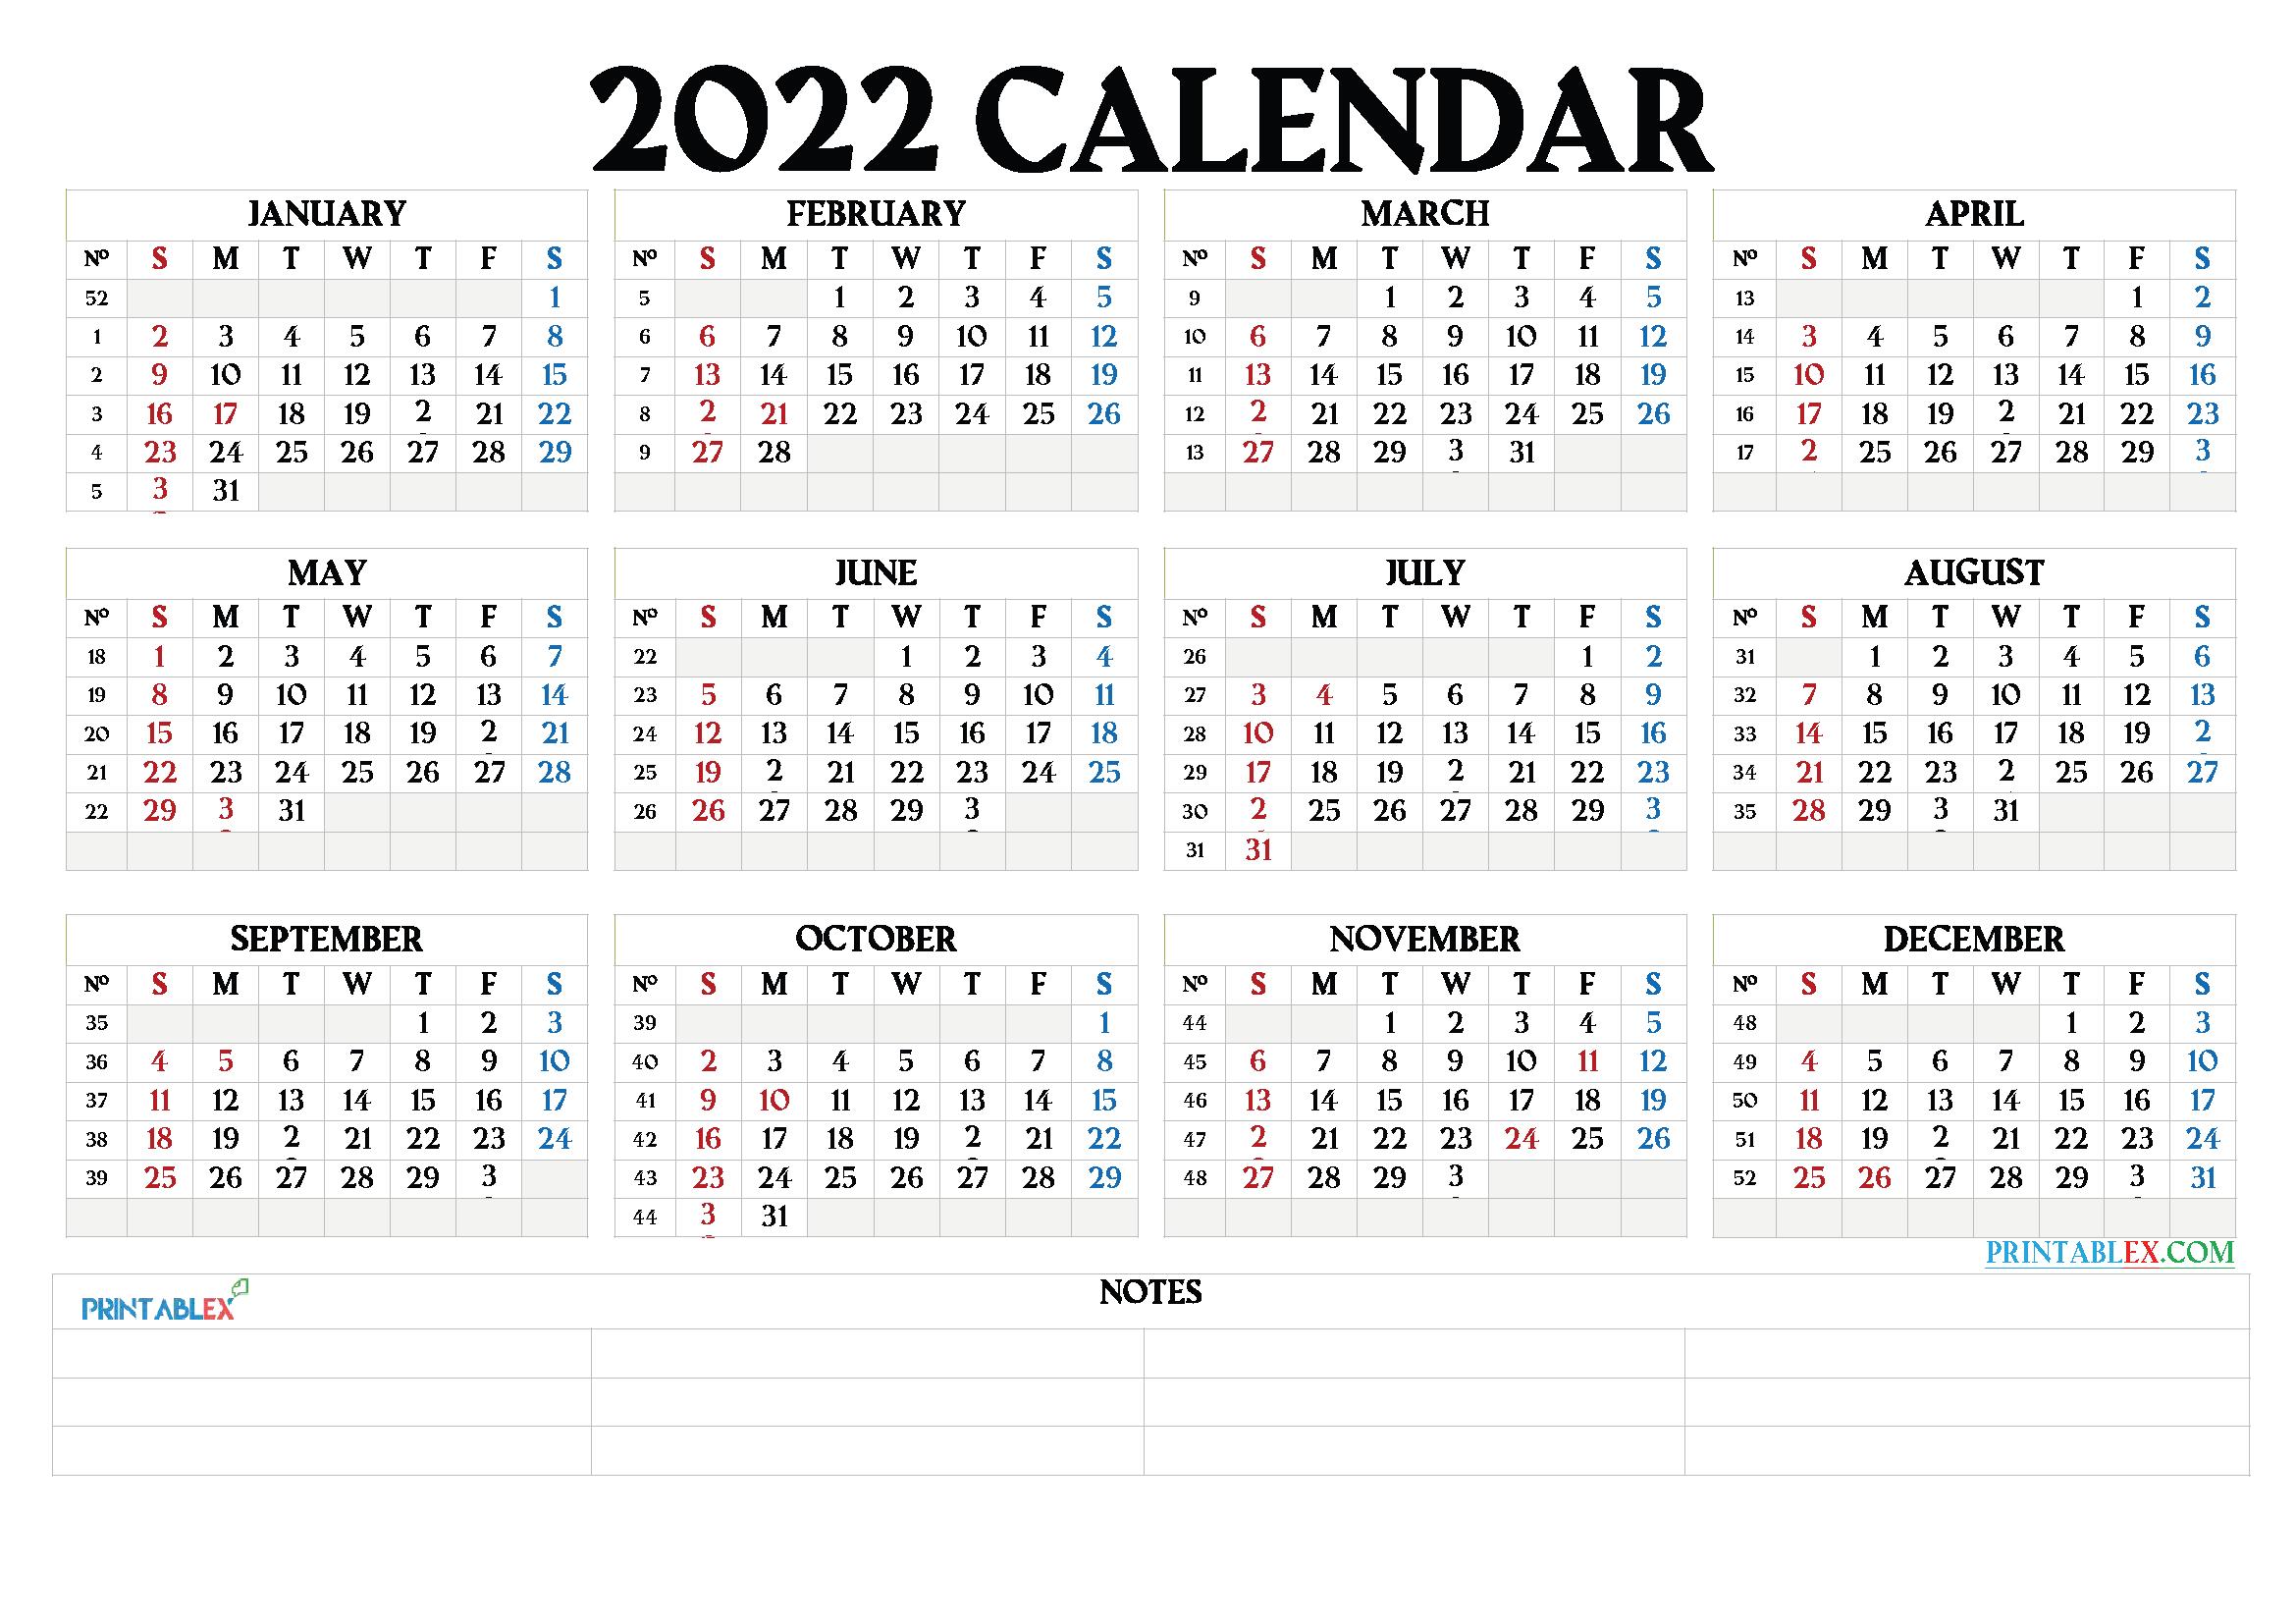 free-printable-2022-calendar-by-year-22ytw65